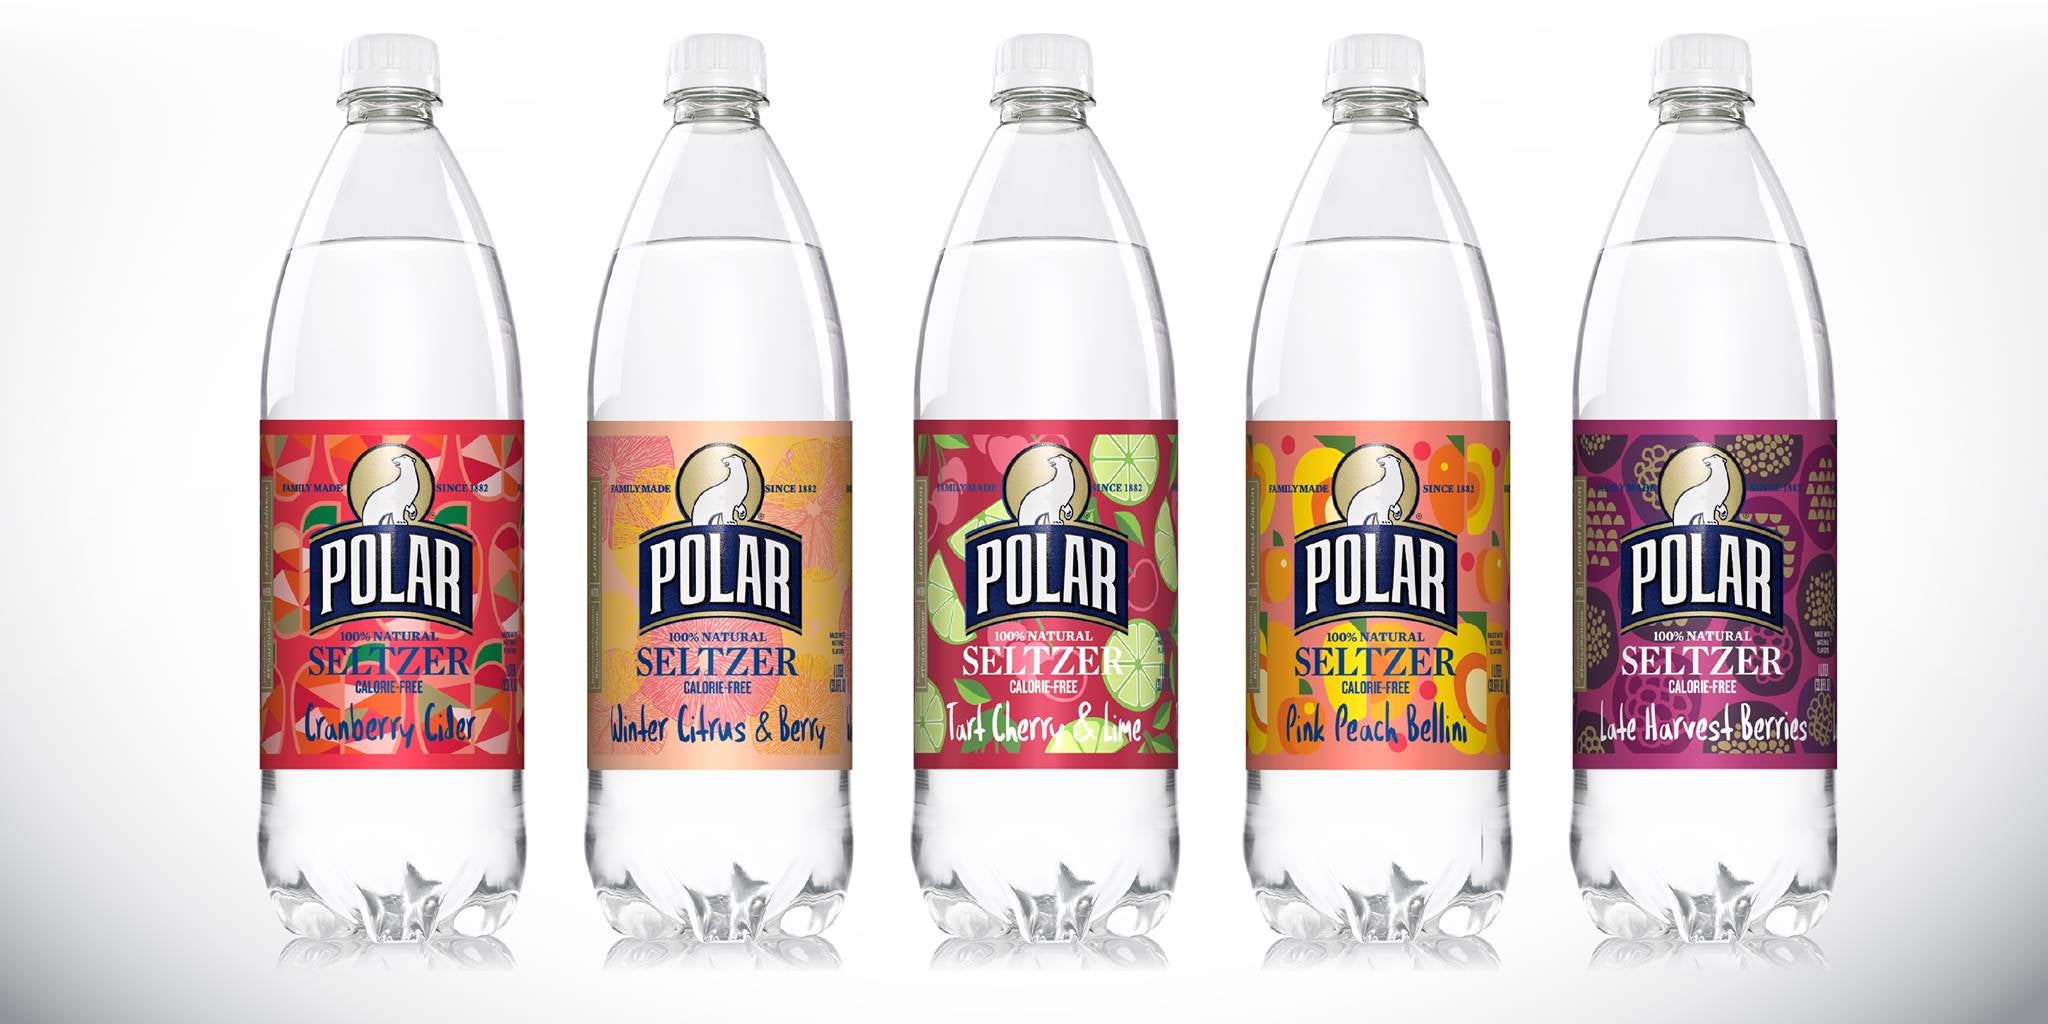 Here are Polar Seltzer’s five new seasonal flavors